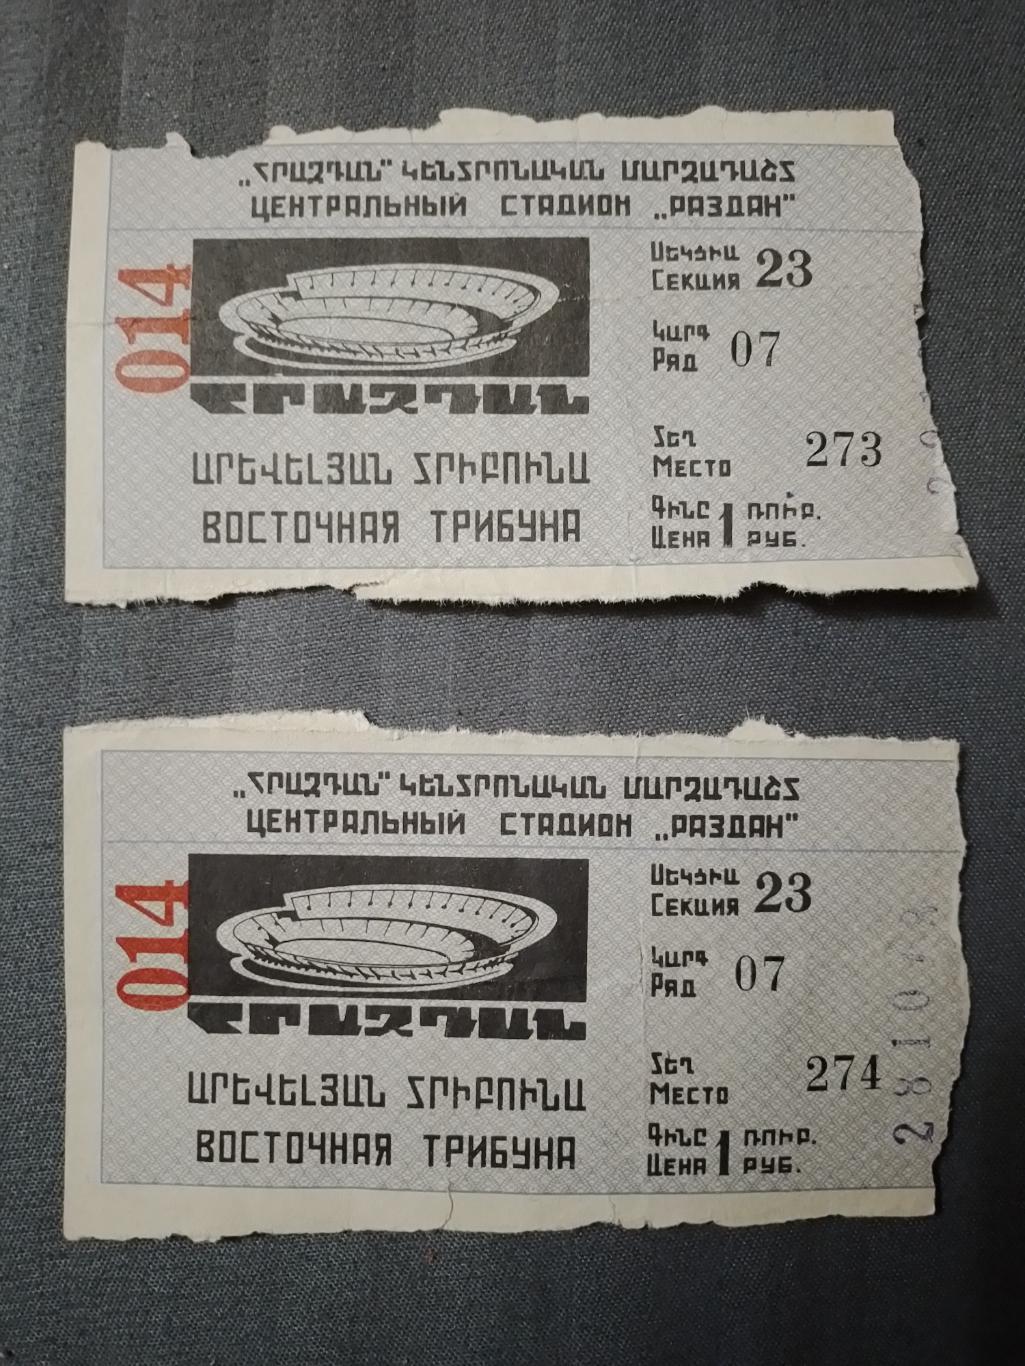 Арарат Армения - Спартак Москва 28.10. 1978. (Верхний билет)